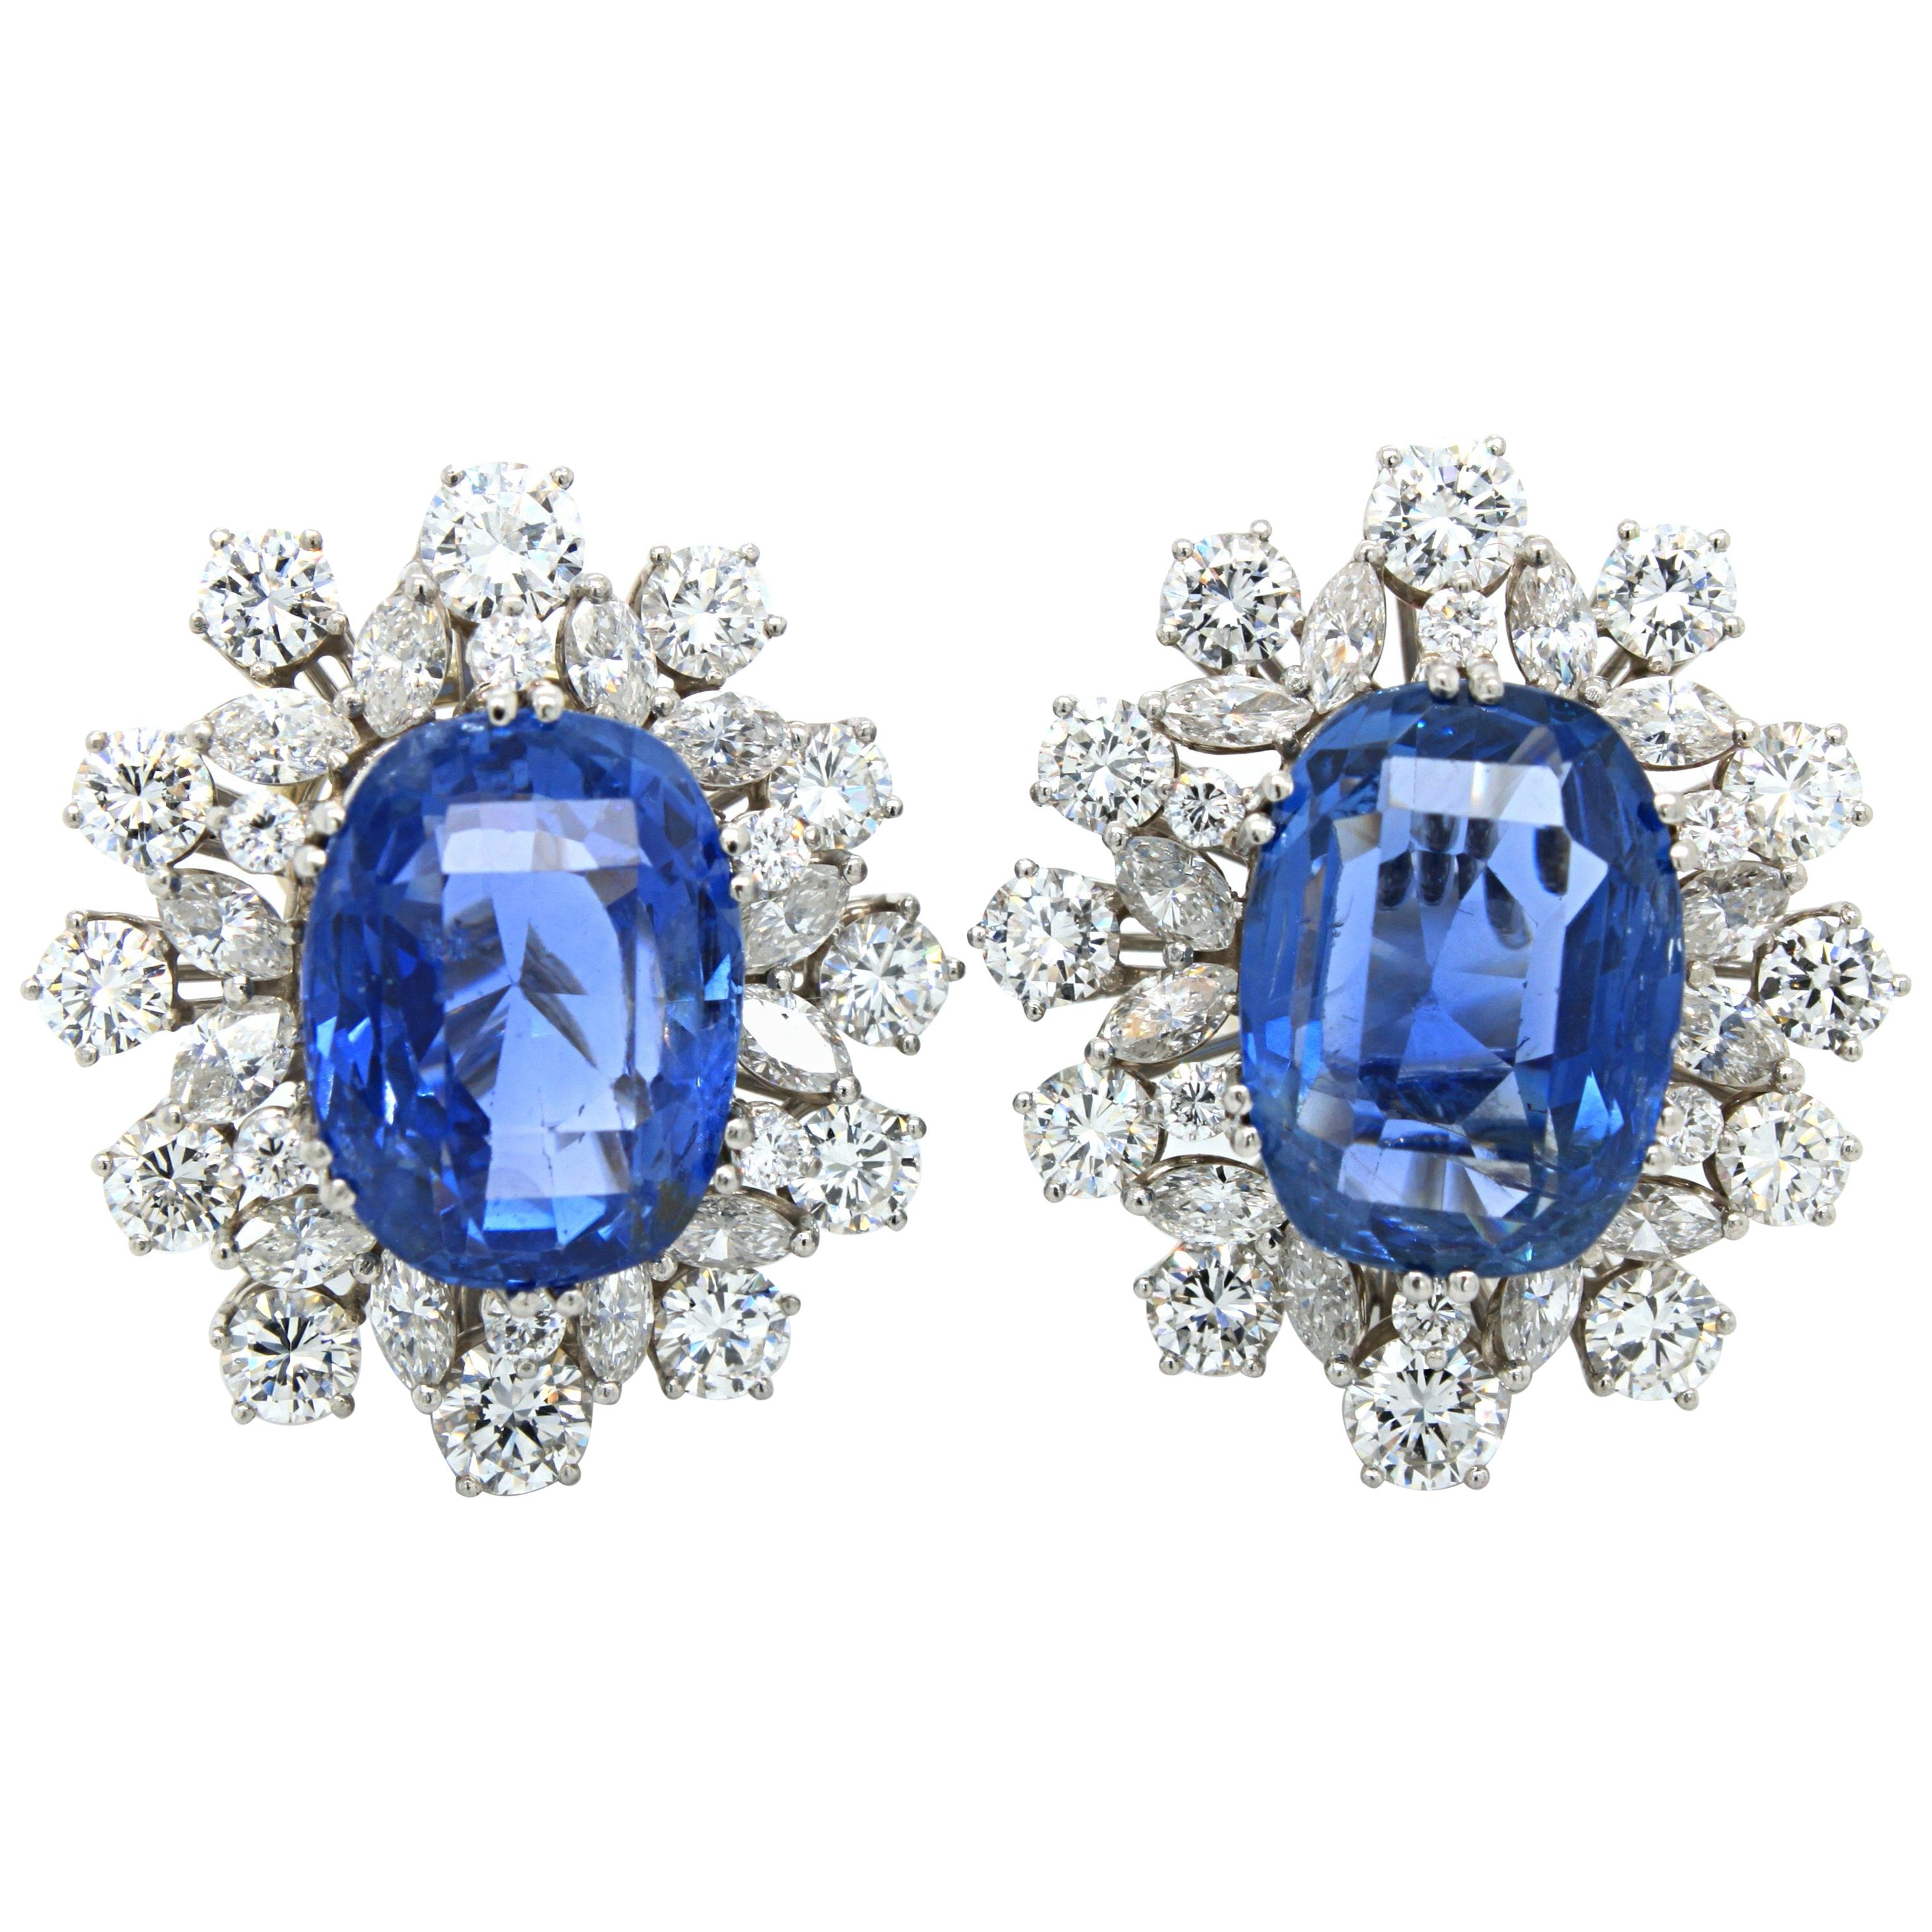 No-Heat Ceylon Sapphire and Diamond Cluster Earrings, circa 1970s